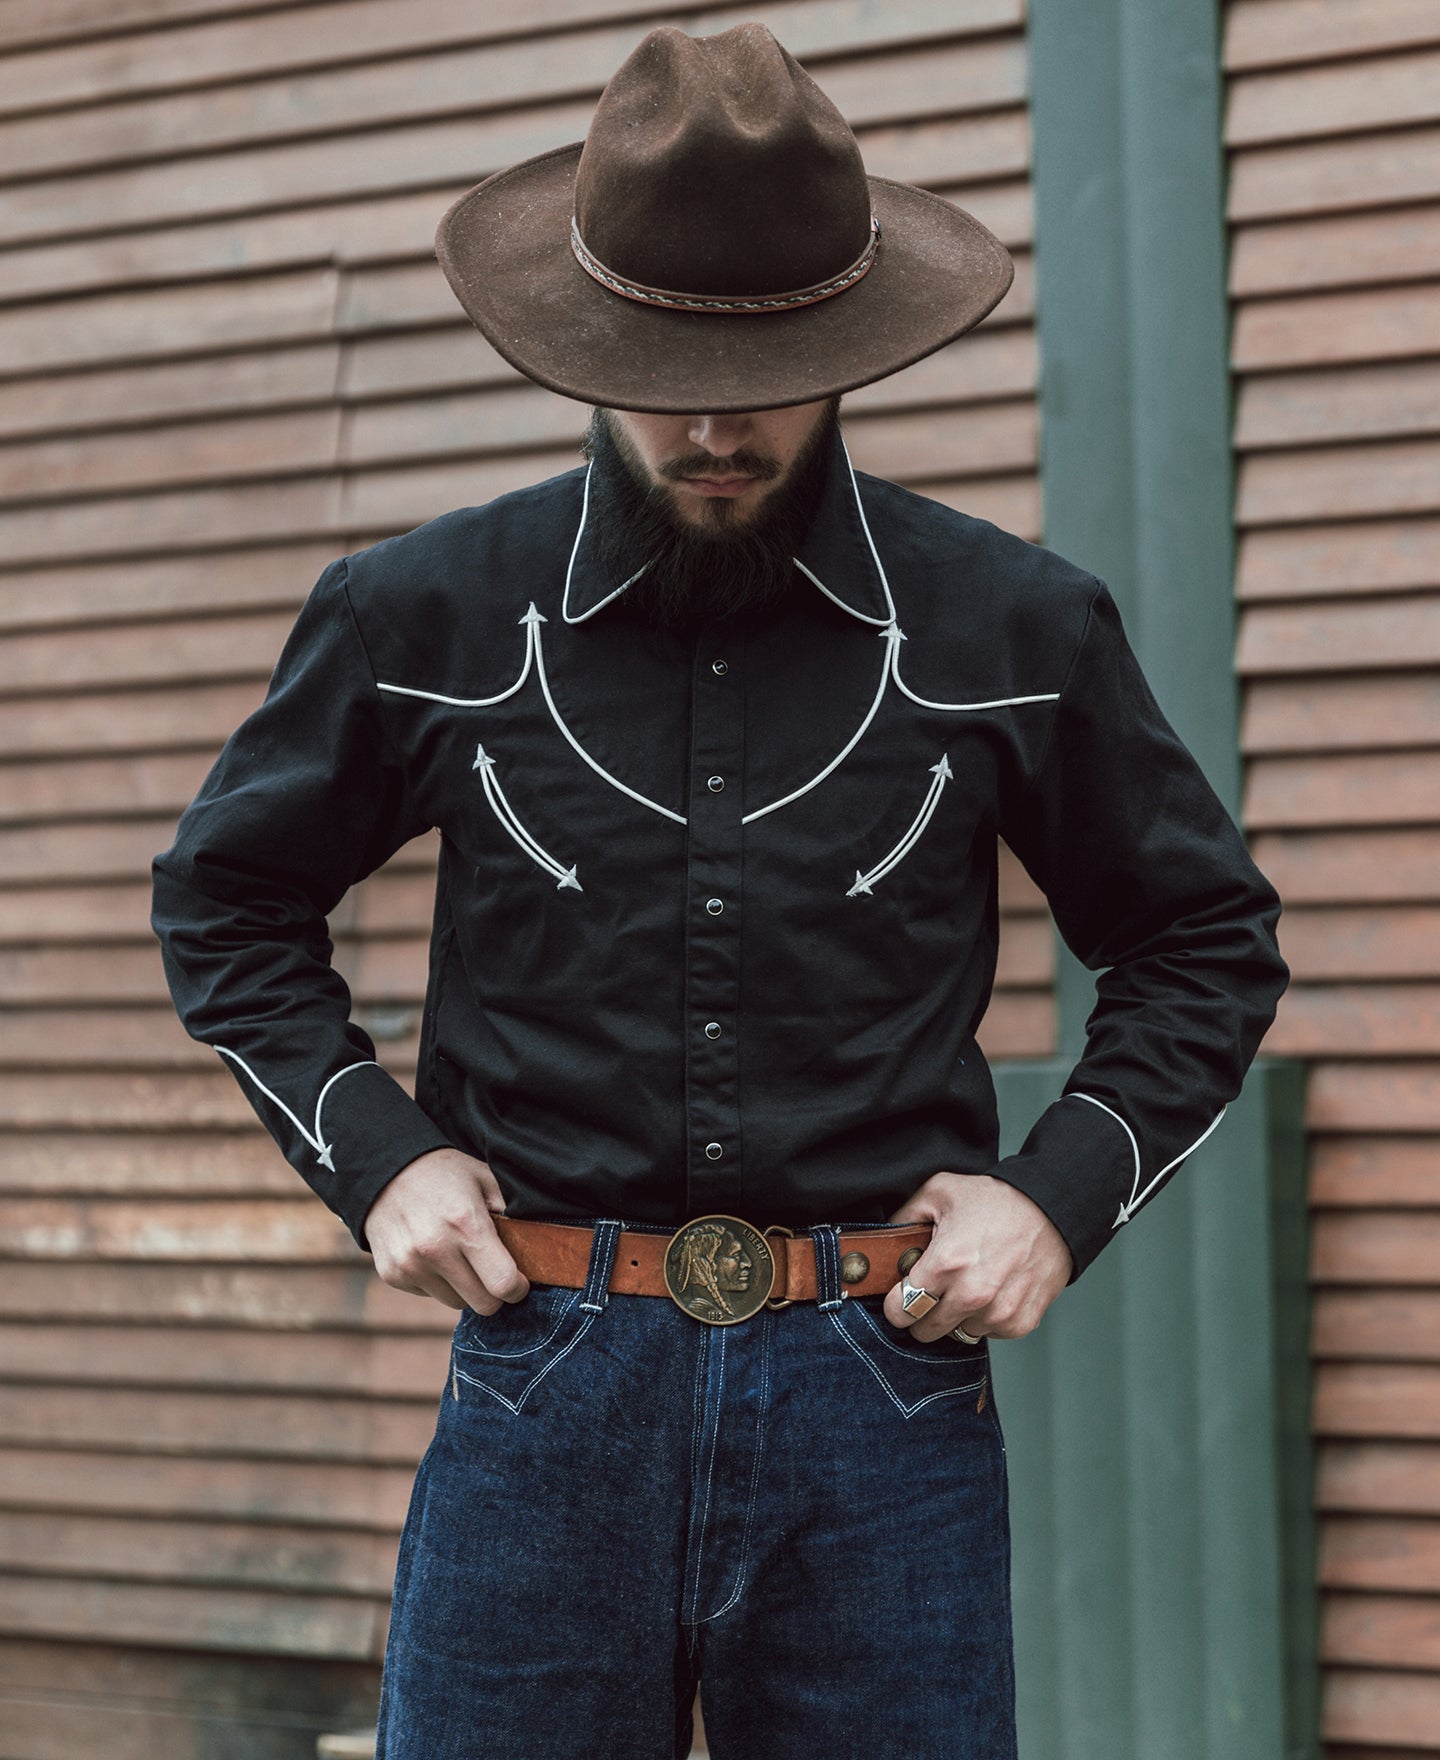 Old Time Western Shirt, Ranchman Wear, Cowboy Shirt